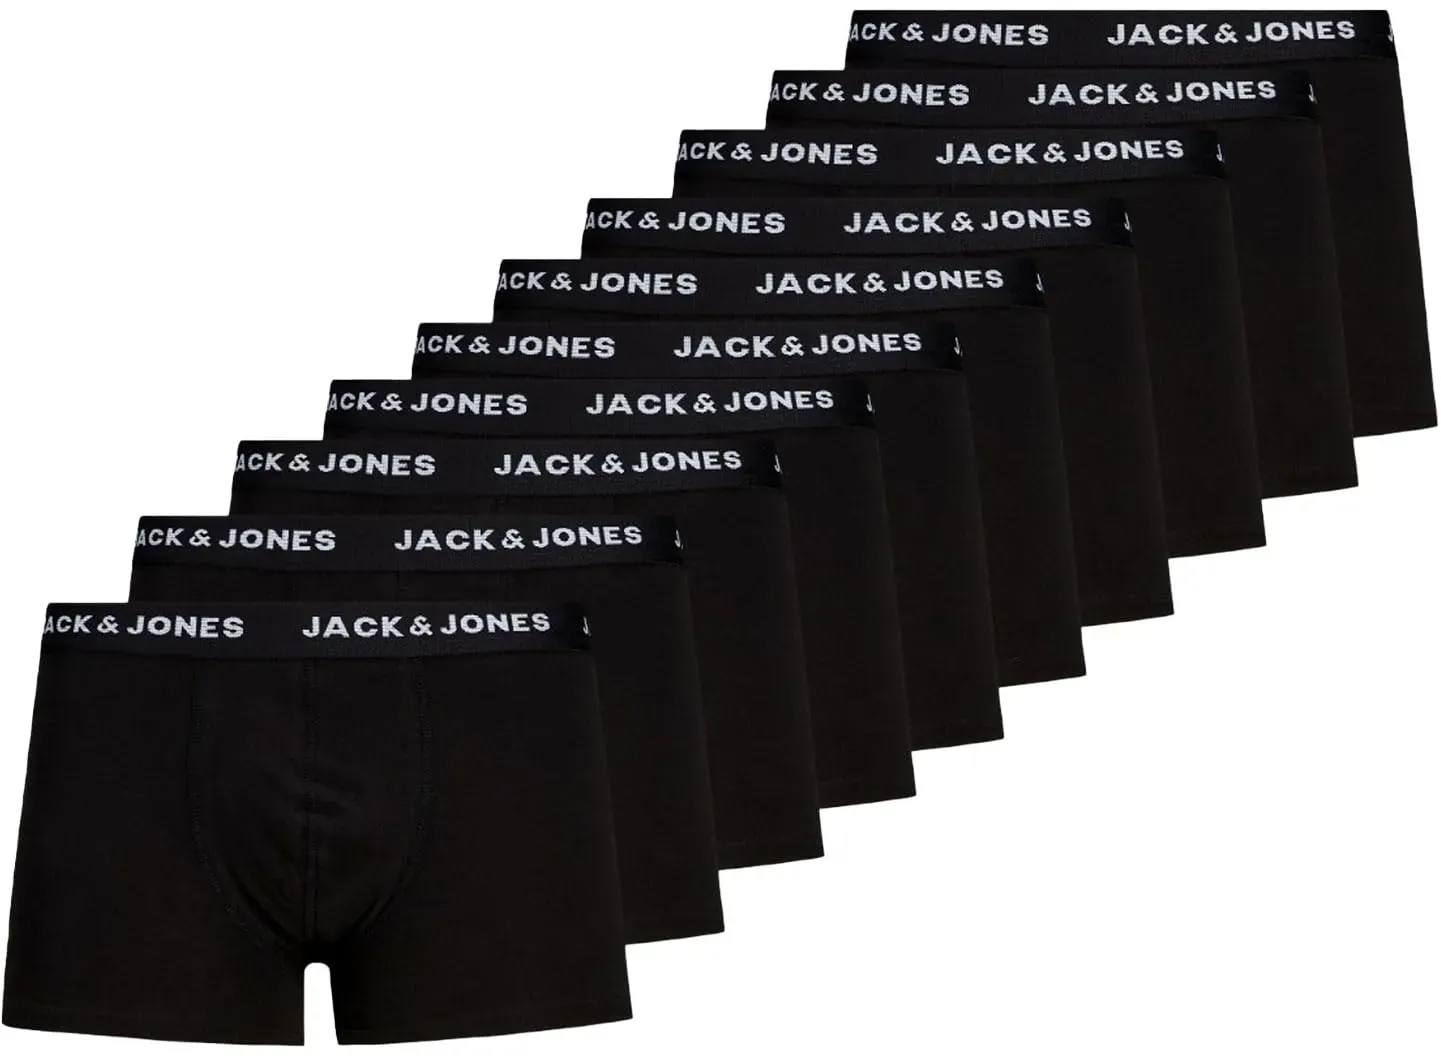 Jack & Jones Herren Jacsolid Trunks 10 Packs Boxershorts, Schwarz, XL EU